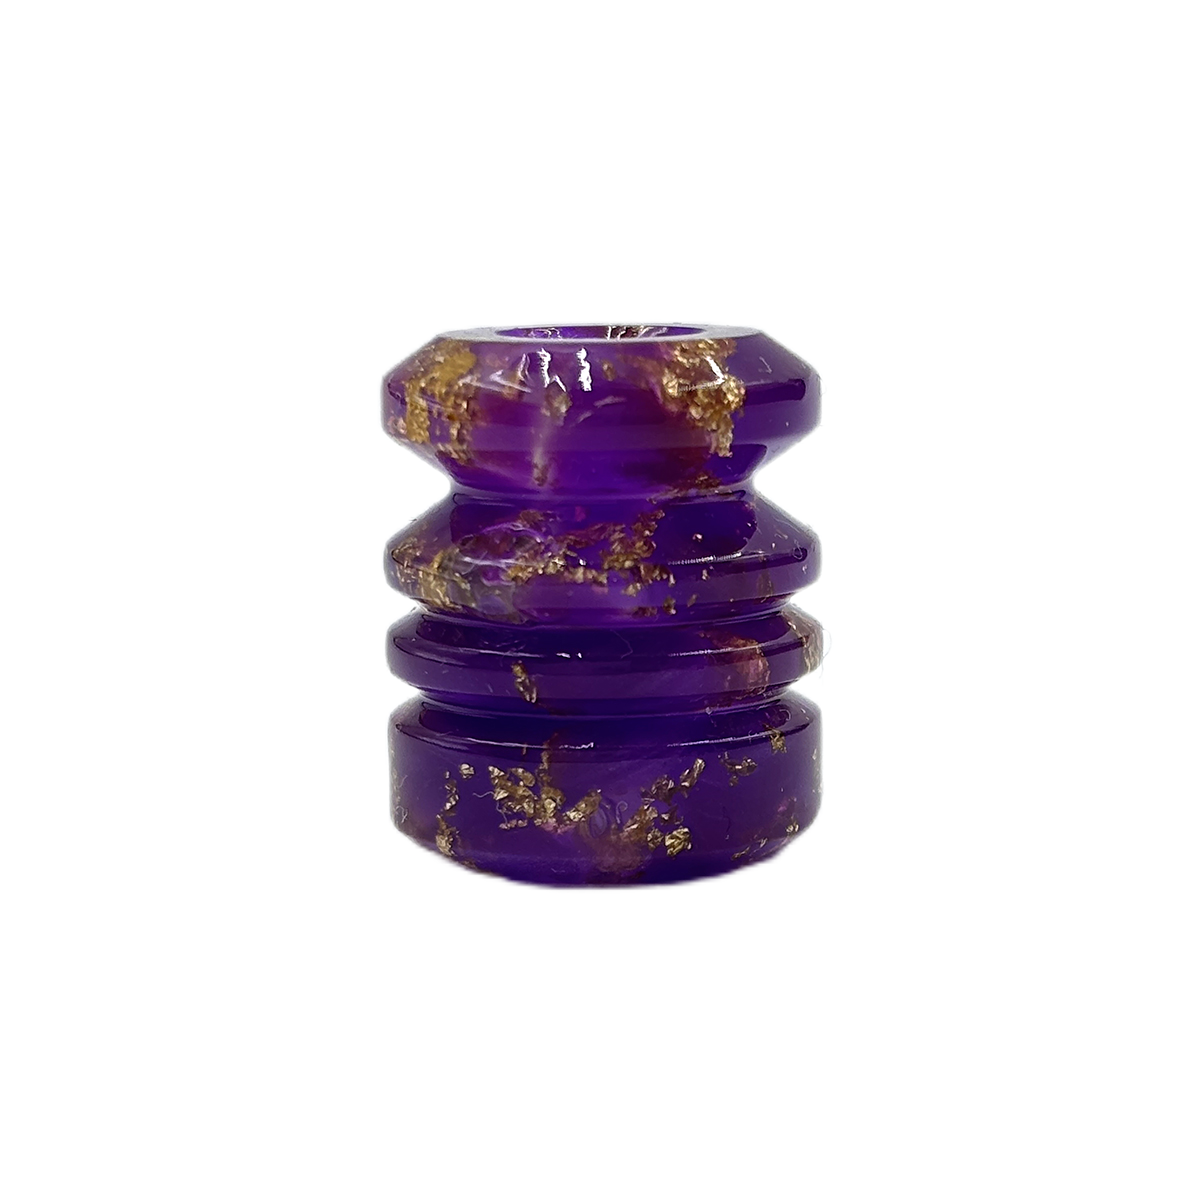 SnakeSword Purple Resin EDC Paracord Lanyard Beads & Accessories 3 pcs